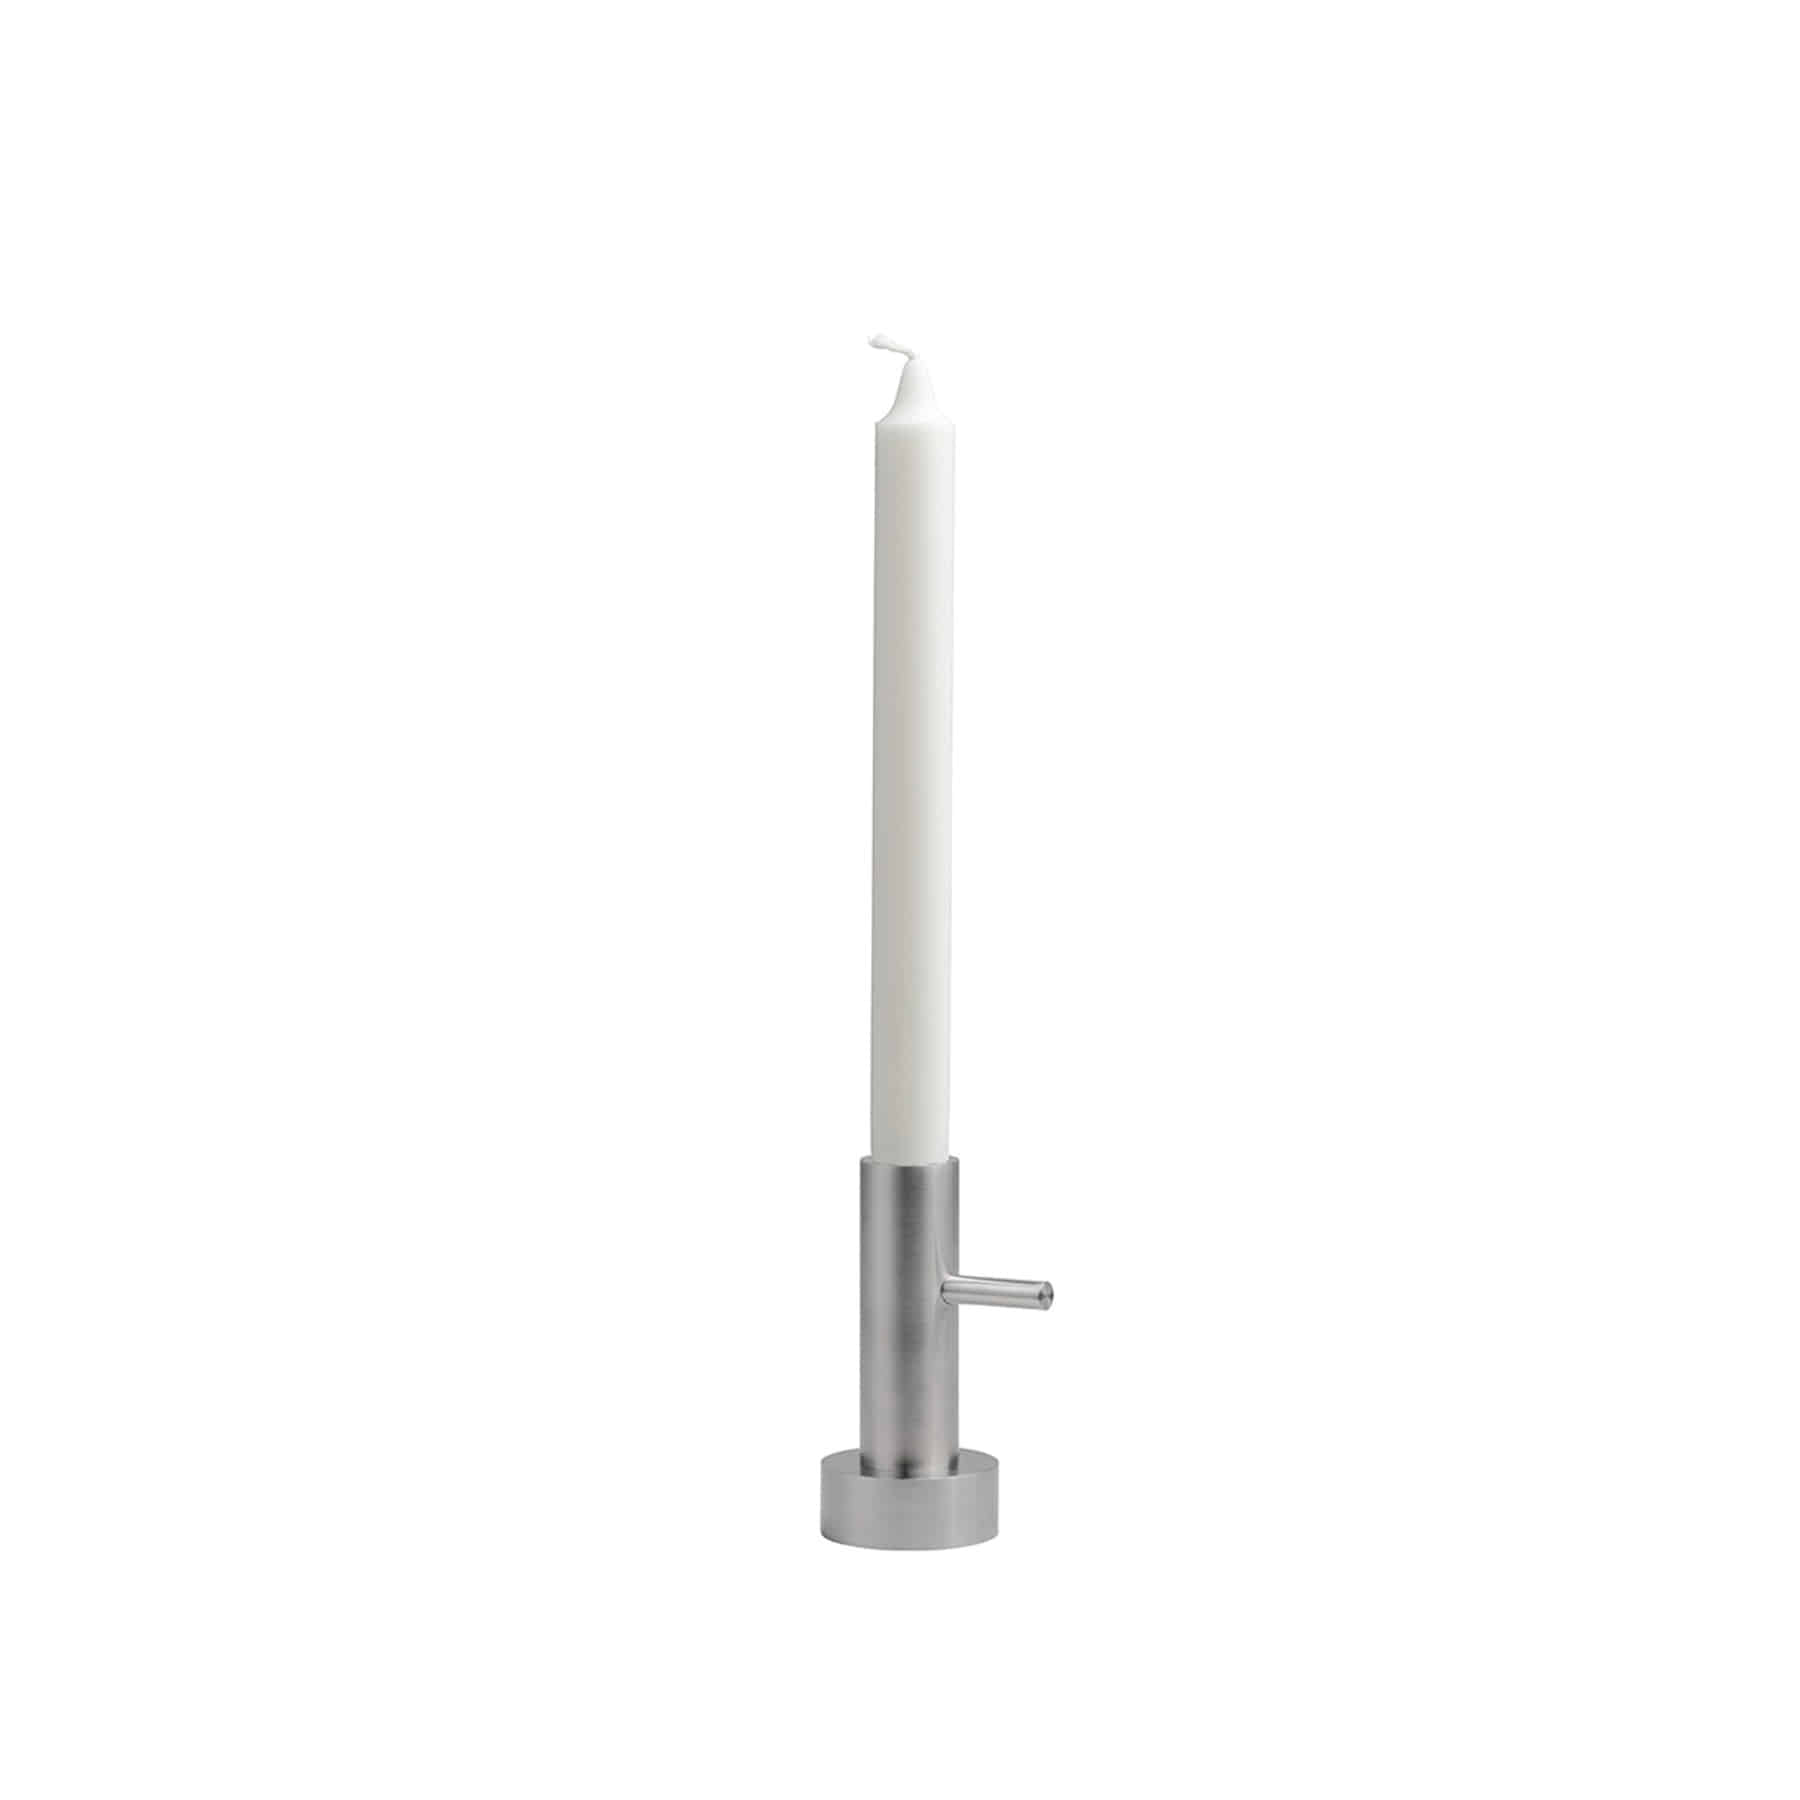 Candleholder Single #1 Stainless steel  프리츠한센 캔들 홀더 싱글 1 스틸